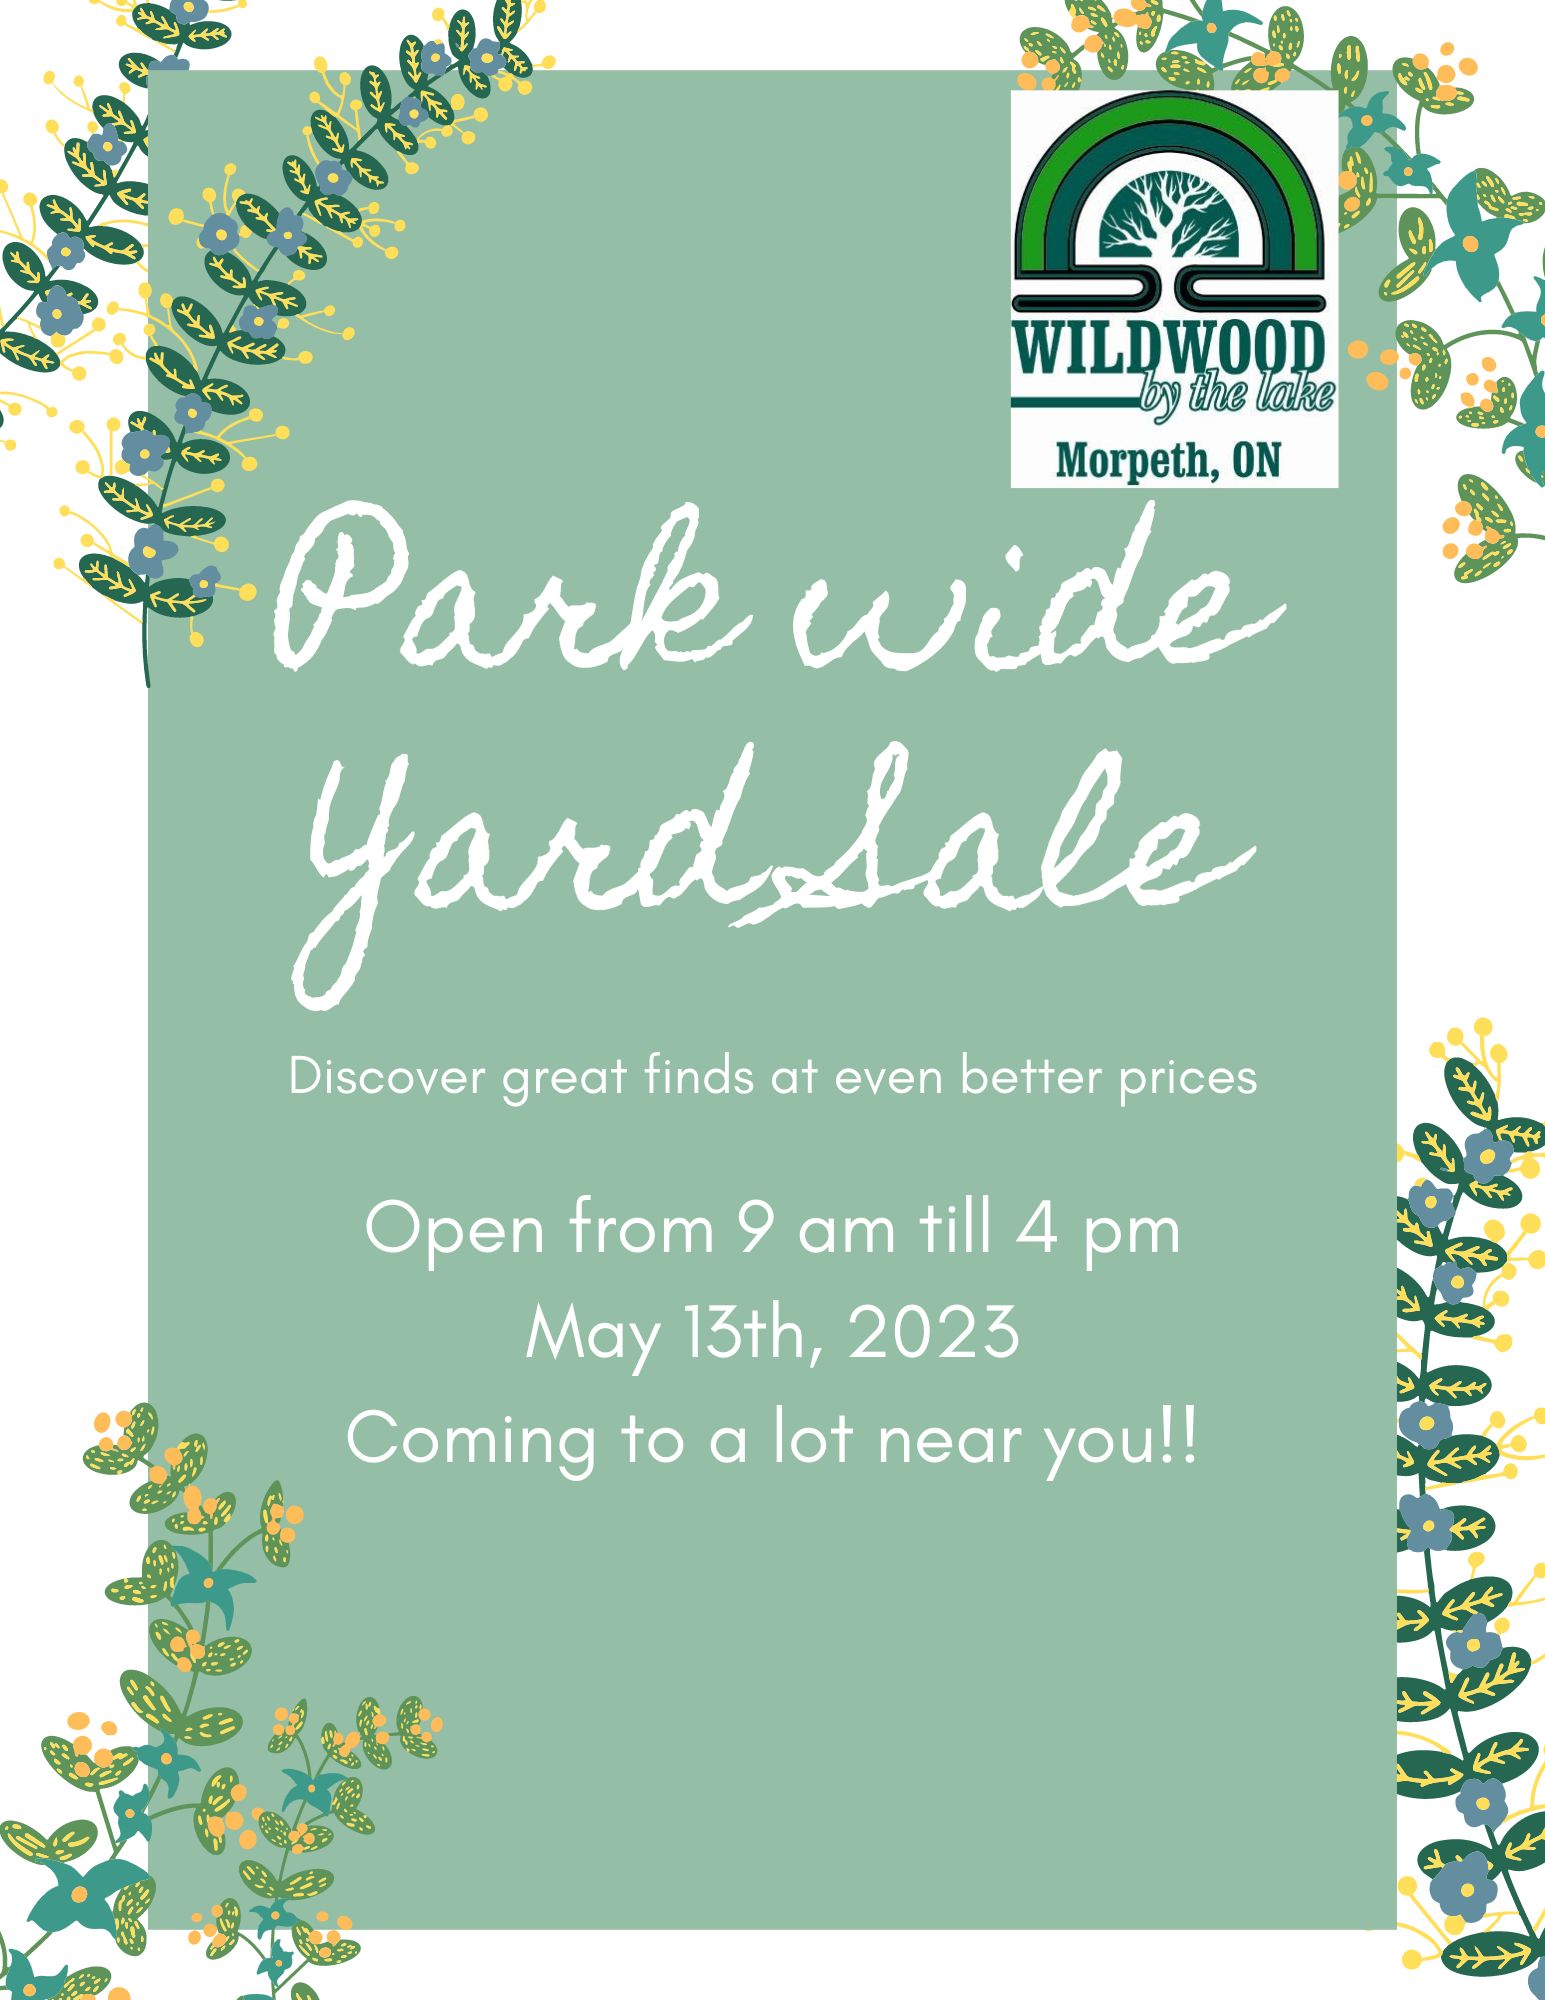 Park Wide Yard Sale!